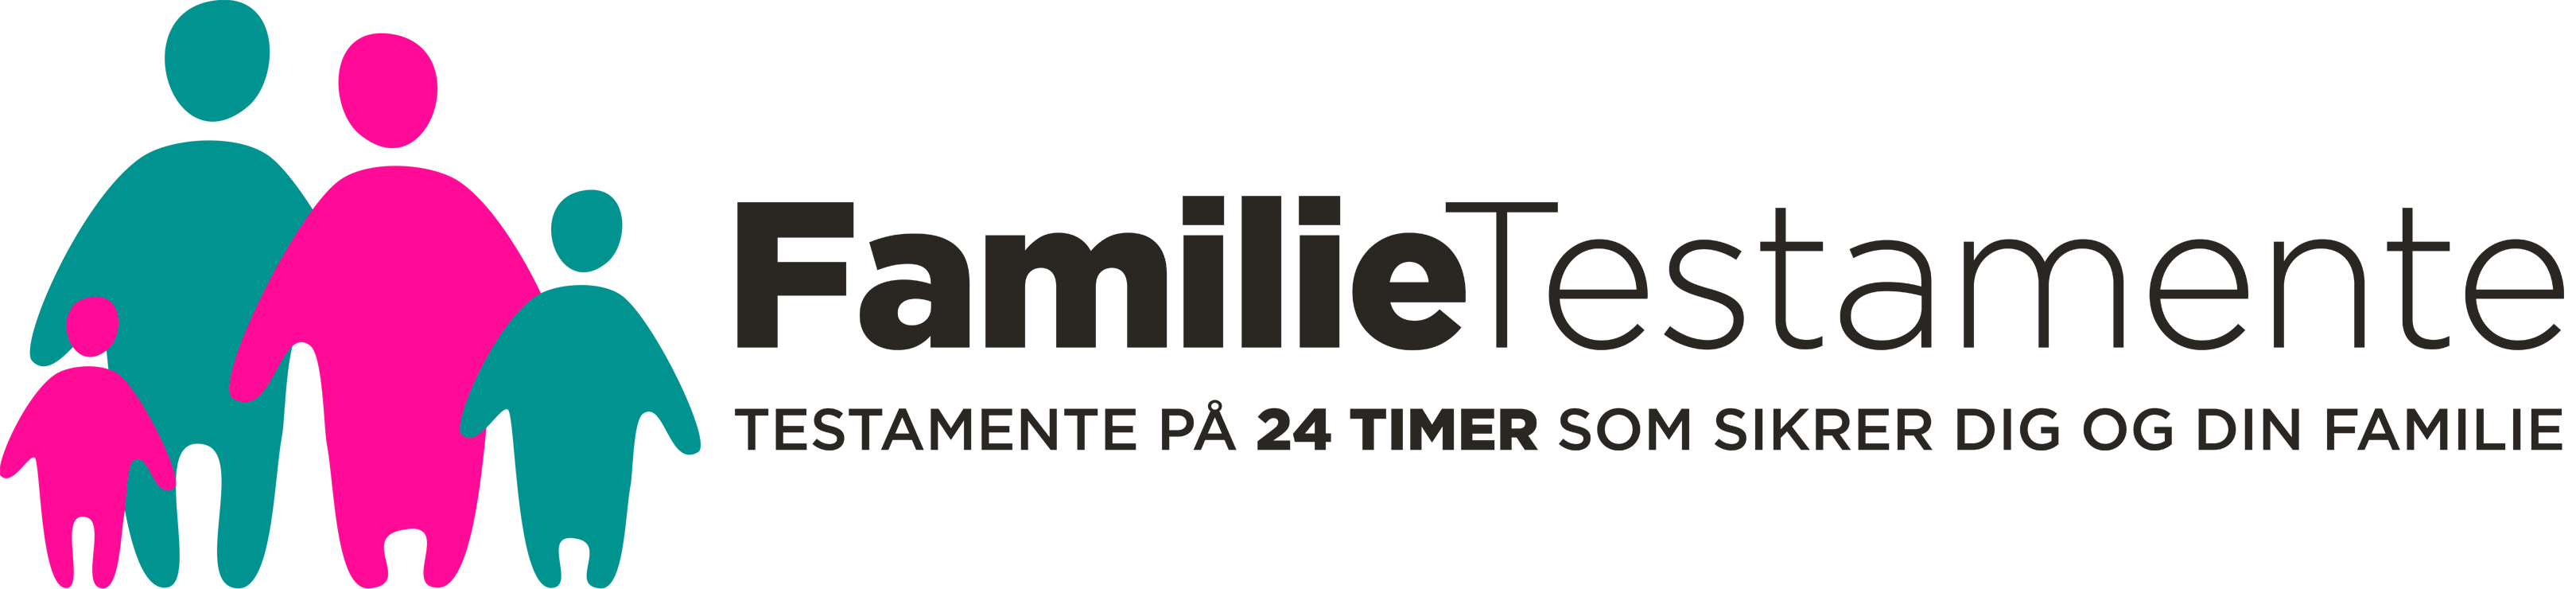 Familietestamente.dk logo